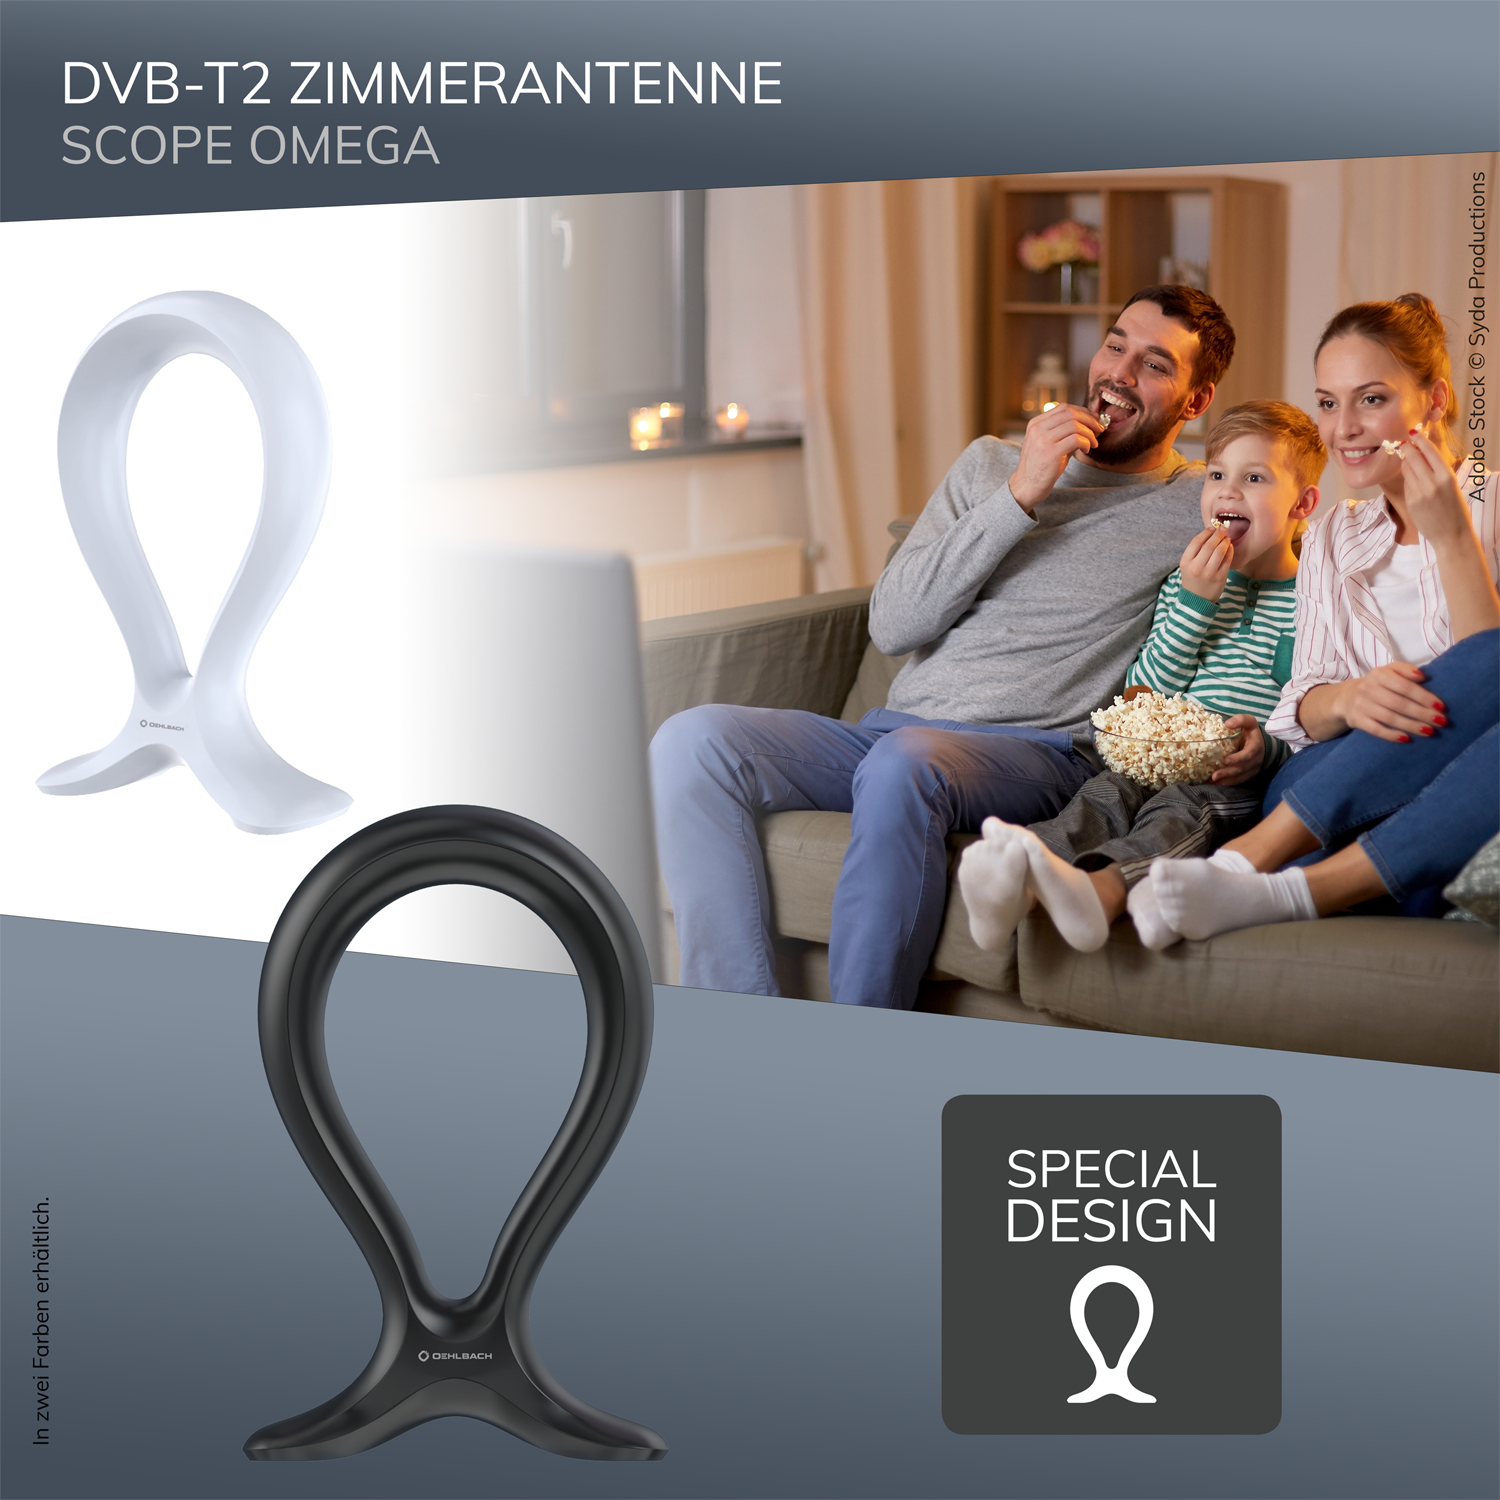 HD DVB-T2 OEHLBACH OMEGA ANTENNE Zimmerantenne SCHWARZ DVB-T2 SCOPE